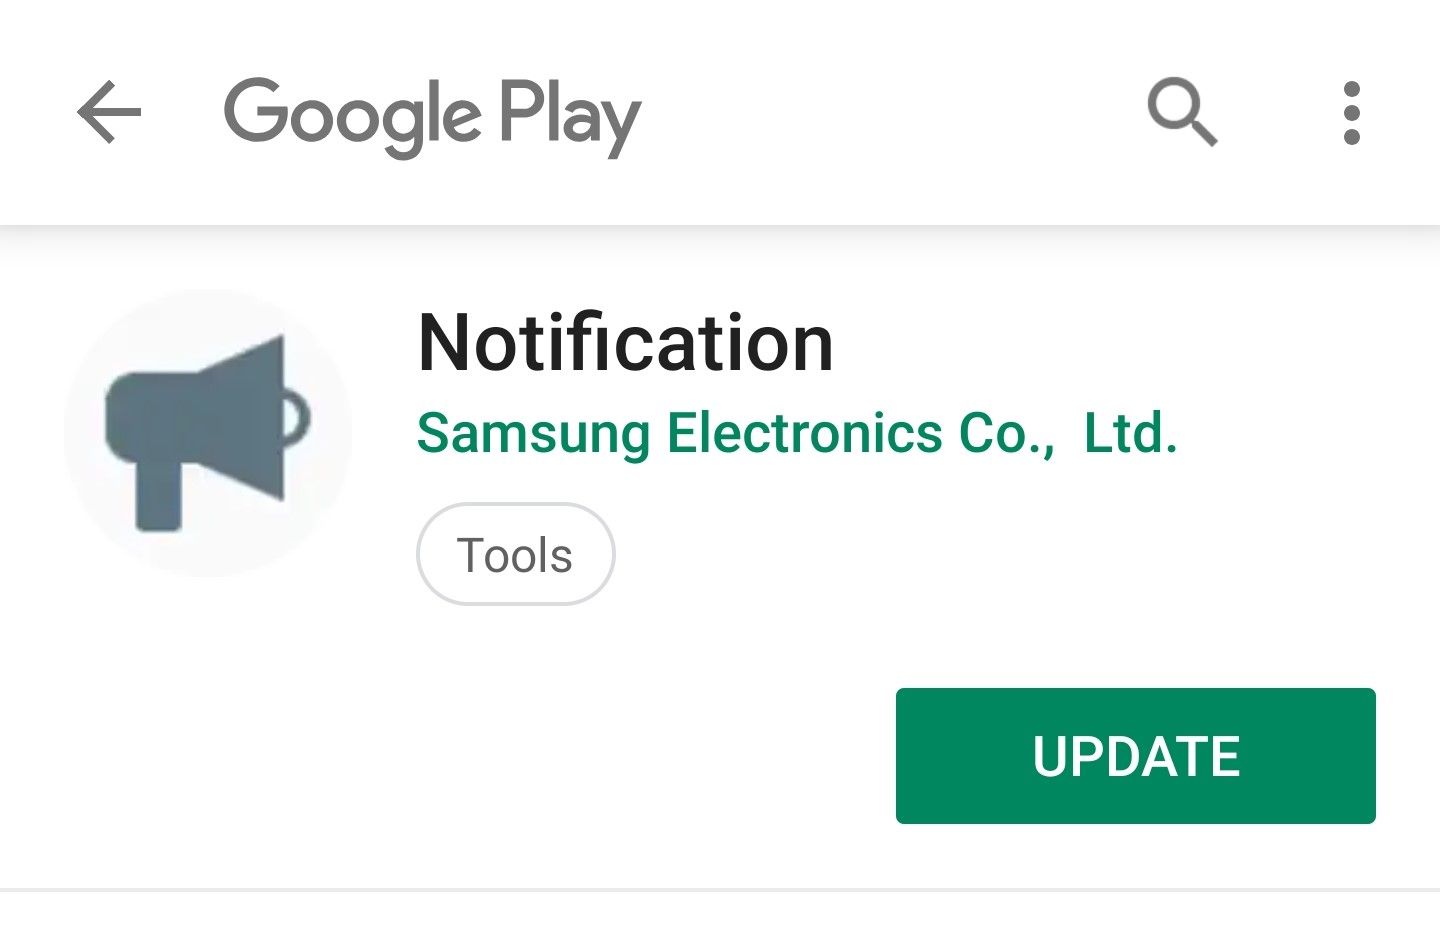 No, the Samsung Notification app update is not dangerous